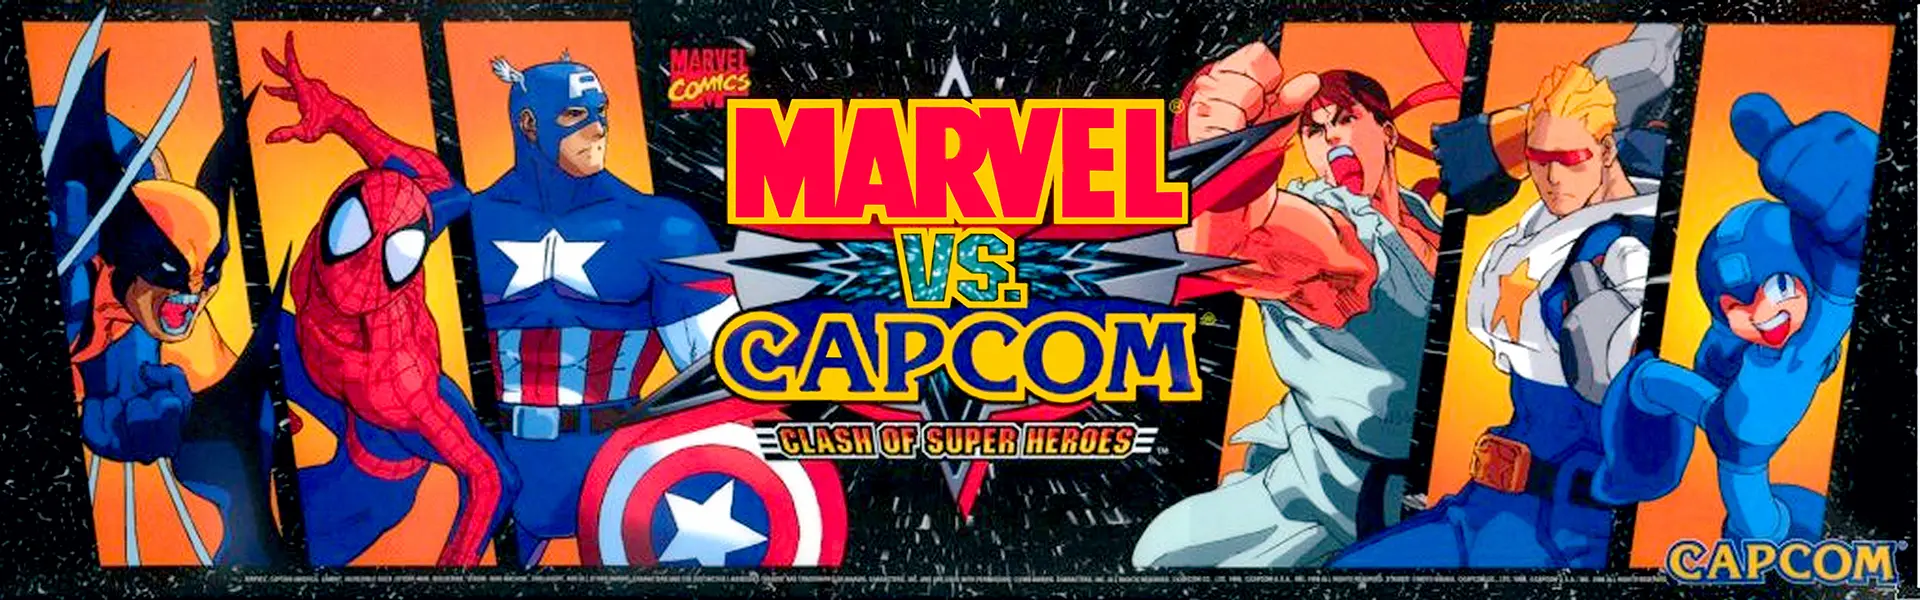 MARVEL vs CAPCOM: The Rape of Unfortunate SuperHeroines! main image